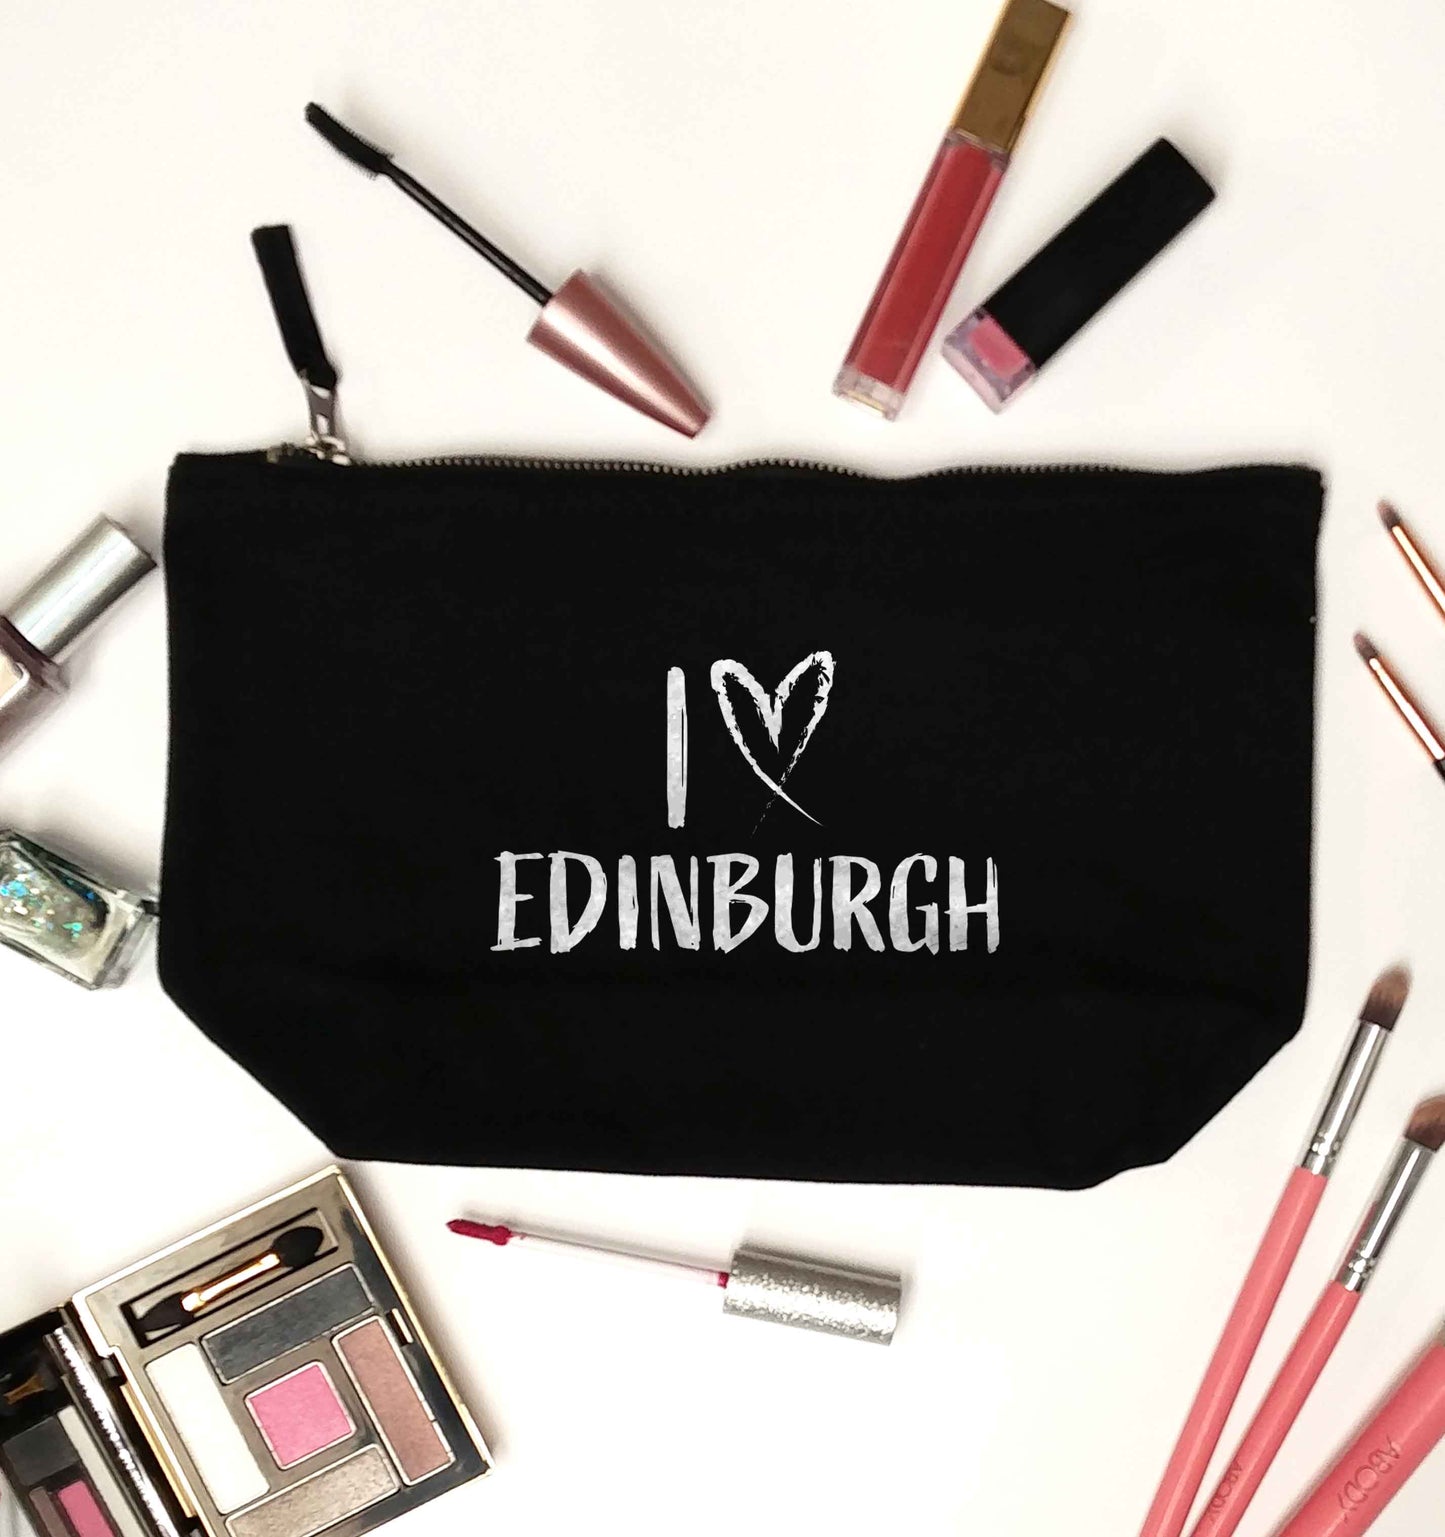 I love Edinburgh black makeup bag